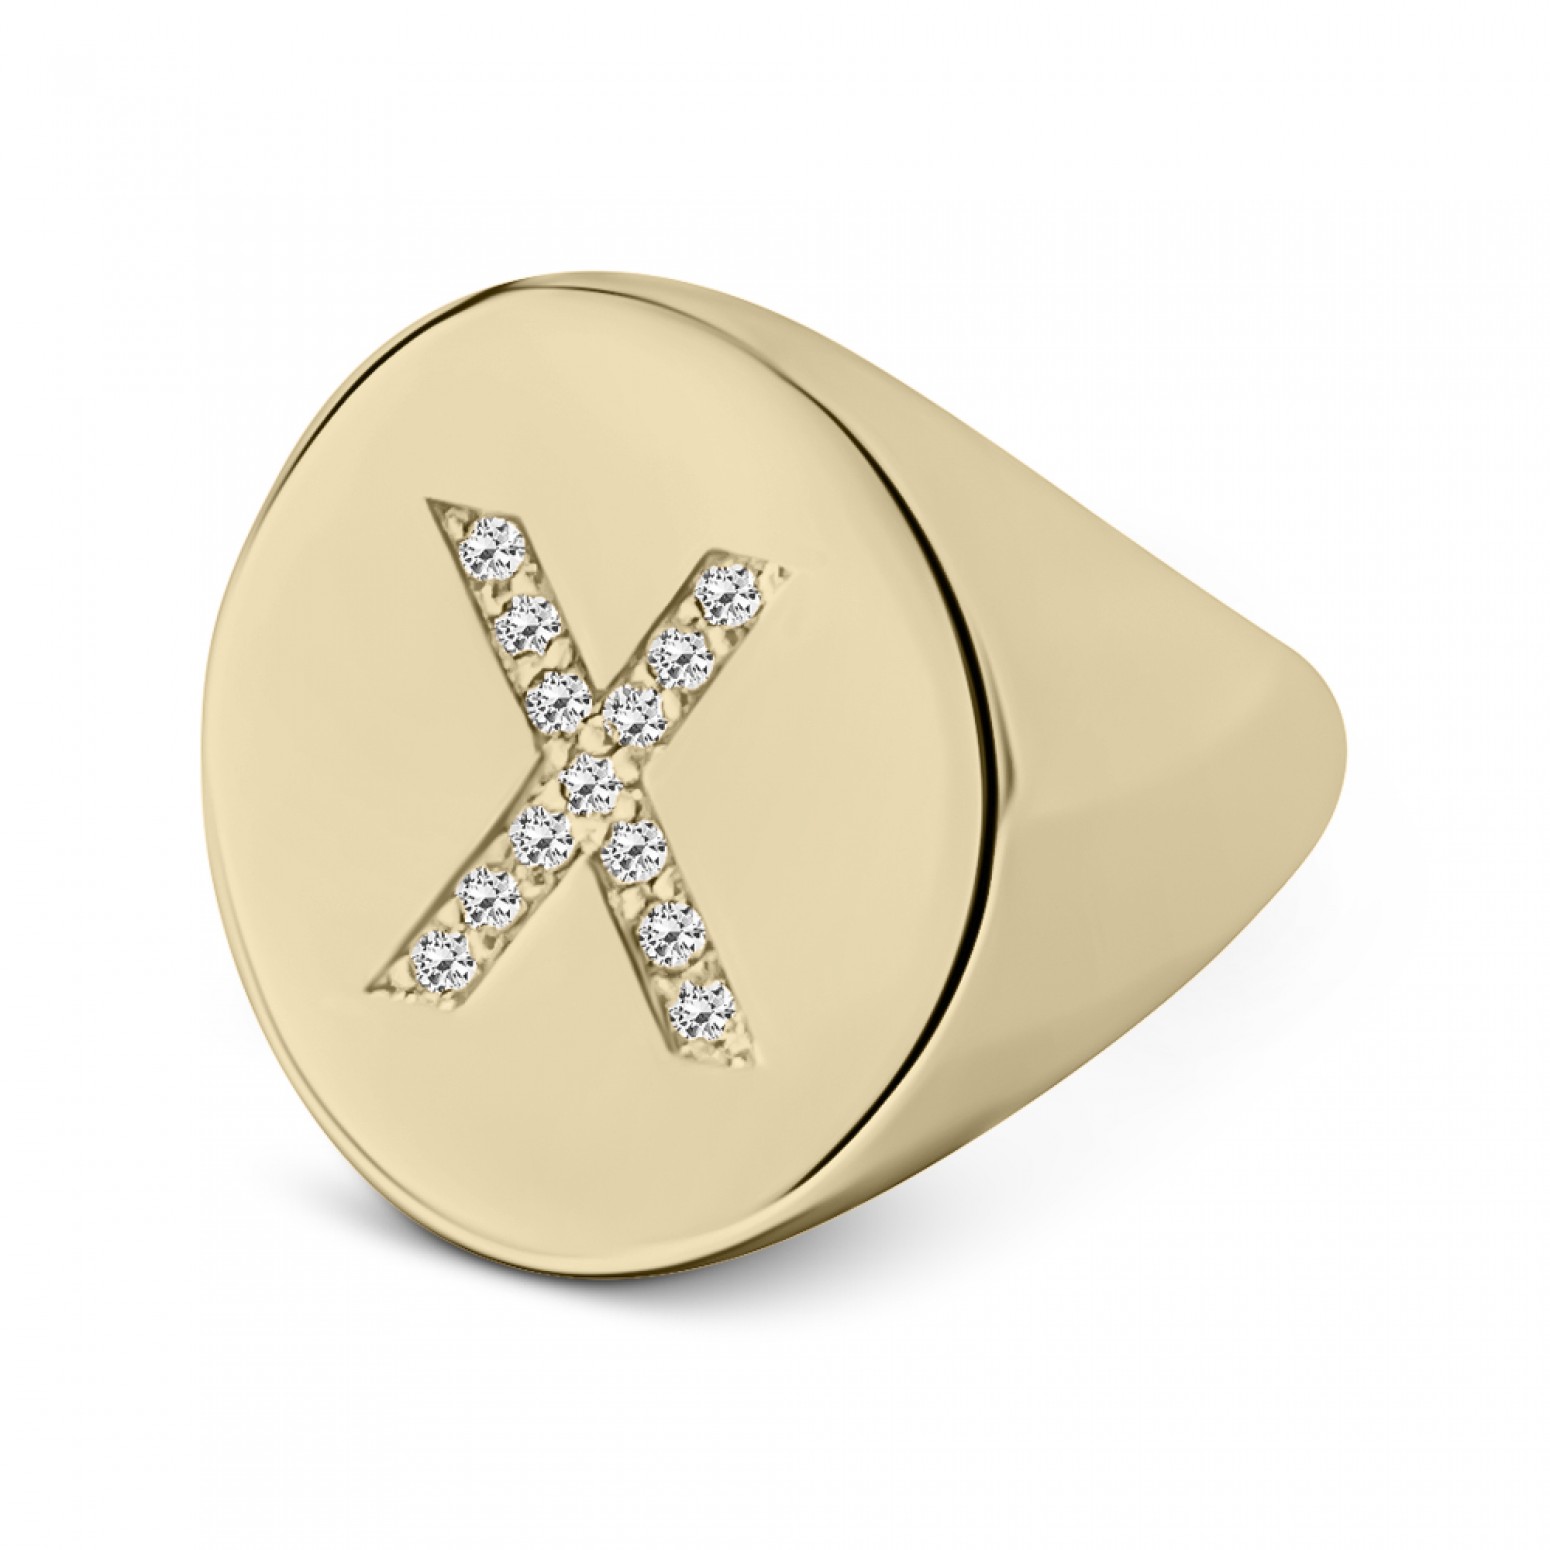 Ring with monogram Χ, K9 gold with zircon, da3886 RINGS Κοσμηματα - chrilia.gr